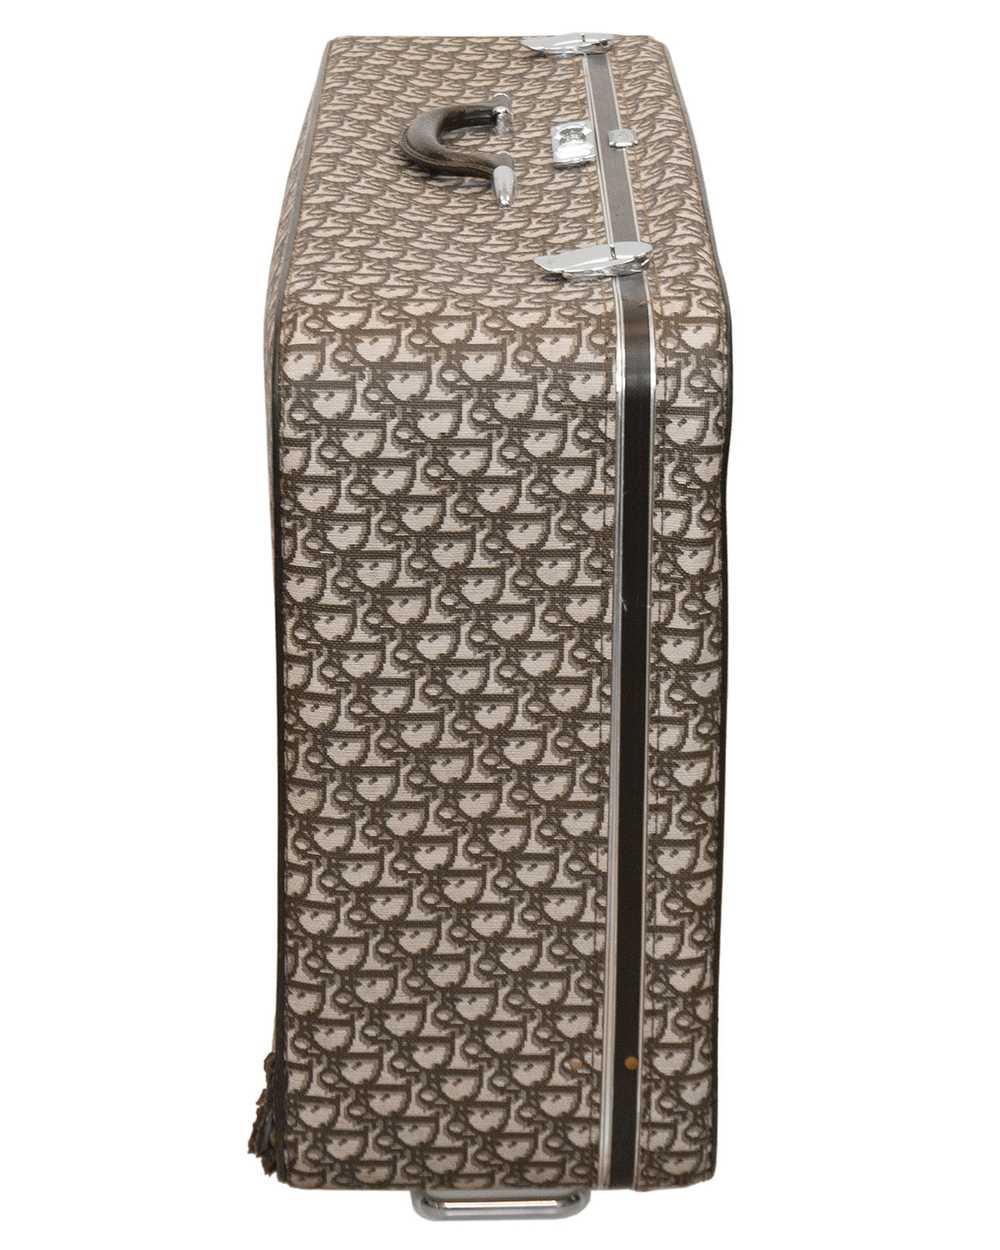 Christian Dior Large Monogram Suitcase - image 3